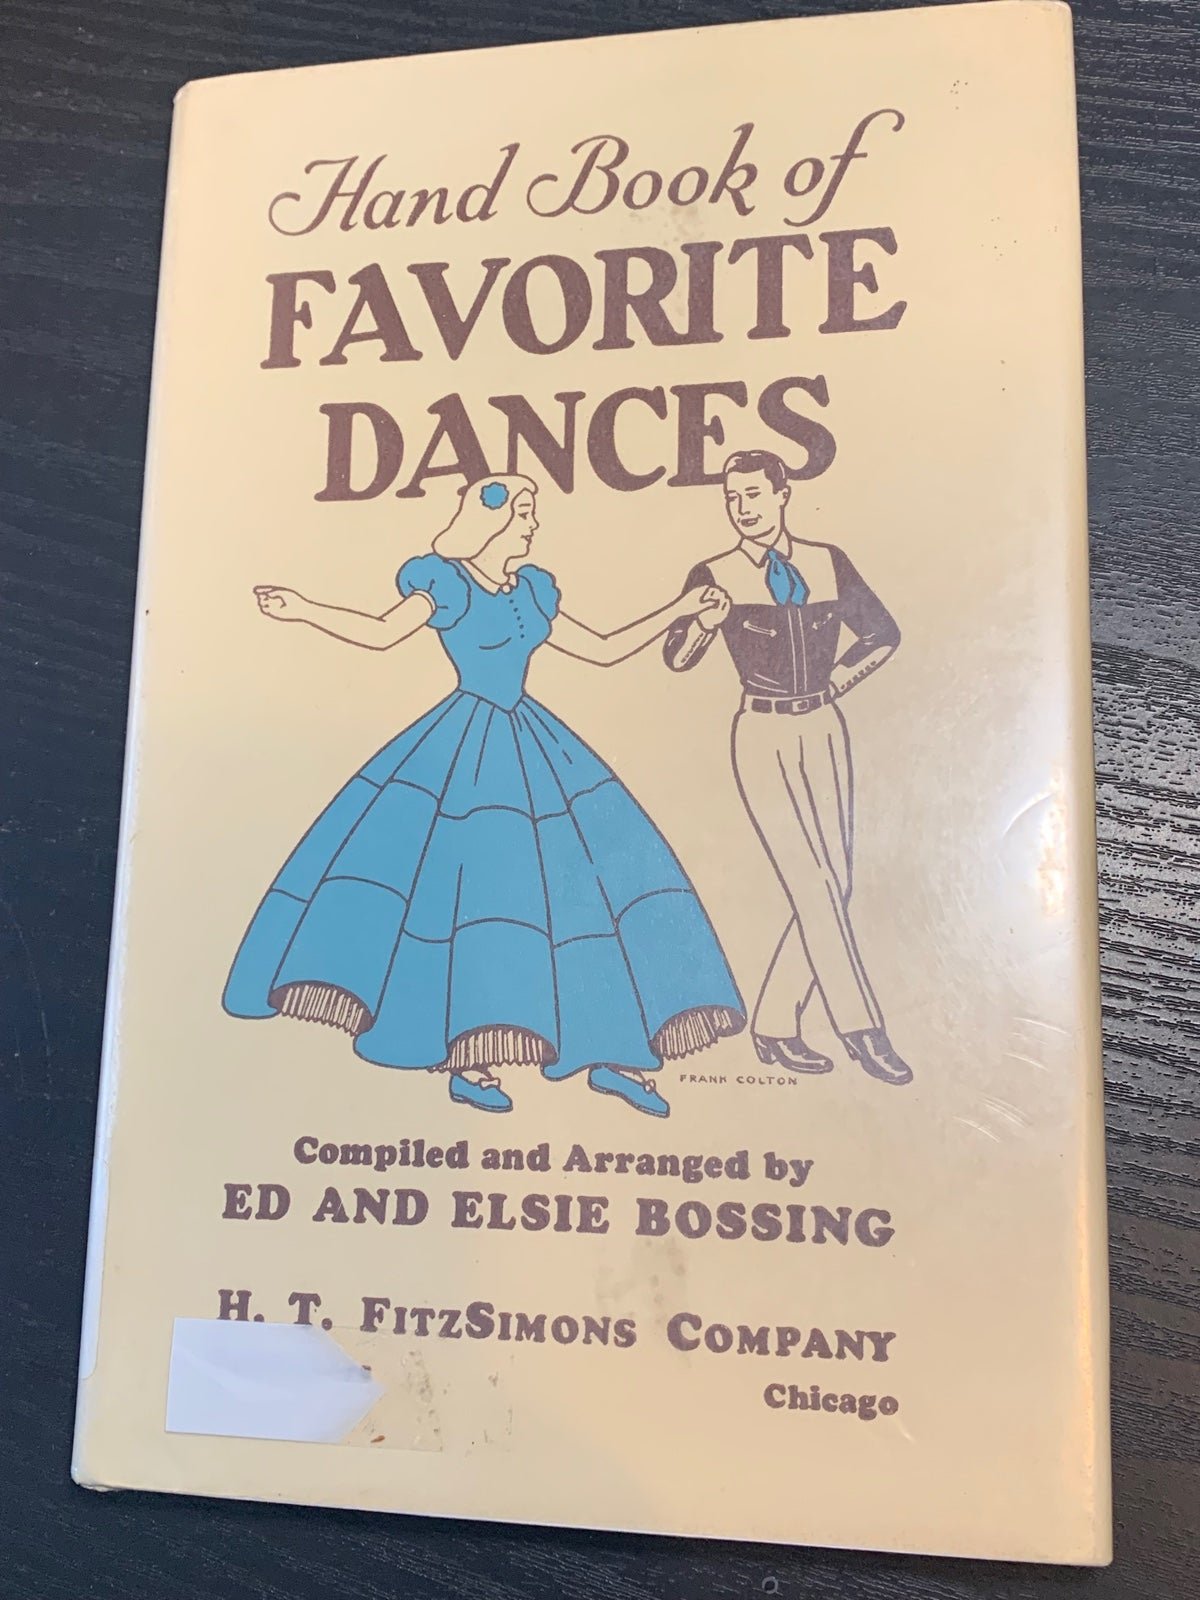 Hand Book of favorite dances antique 1955 rare book BsG4XgTn6